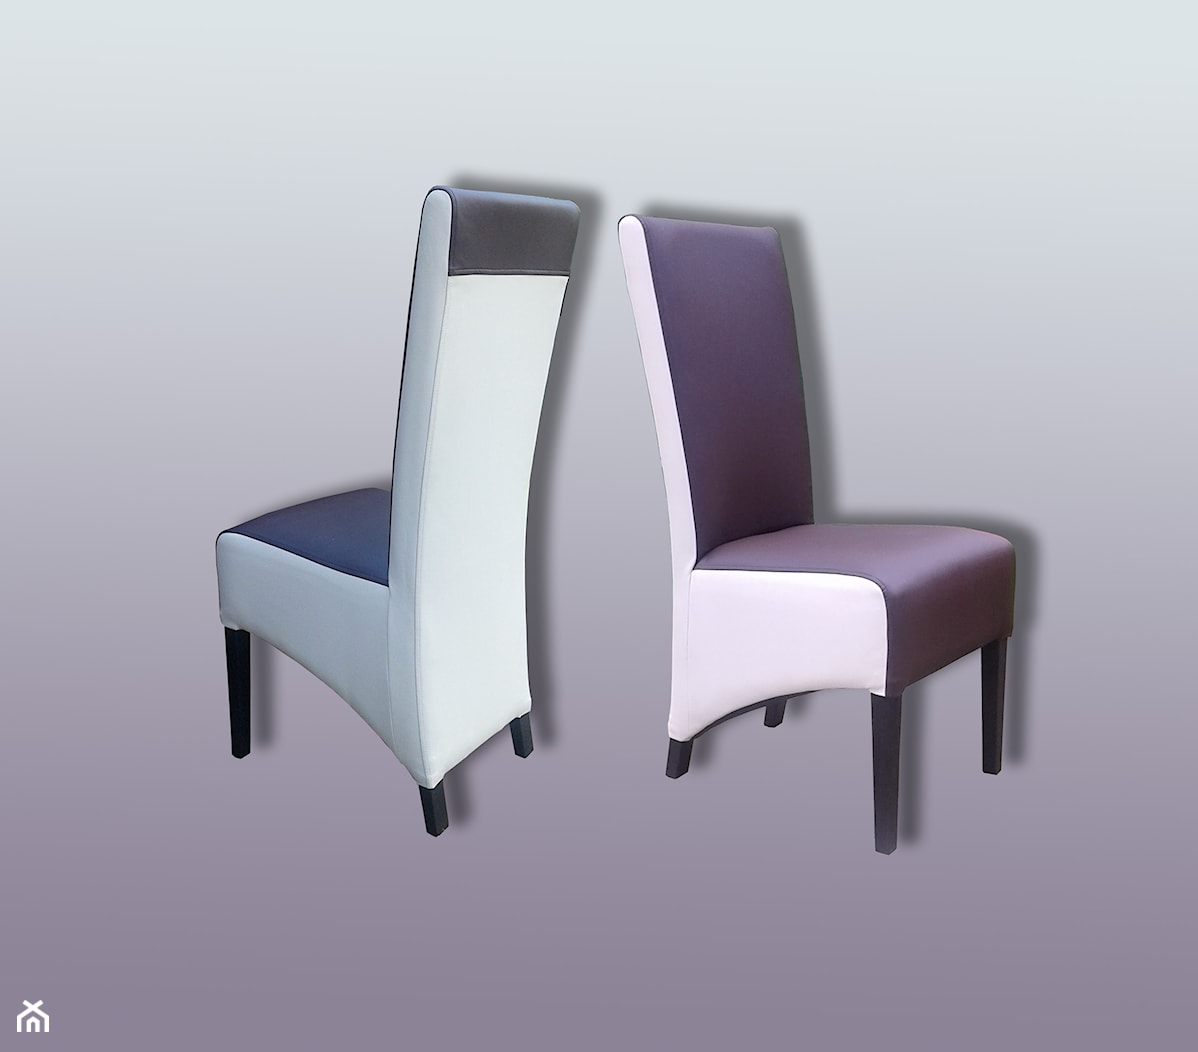 Krzesło verrucci - zdjęcie od marcello_meble1 - Homebook